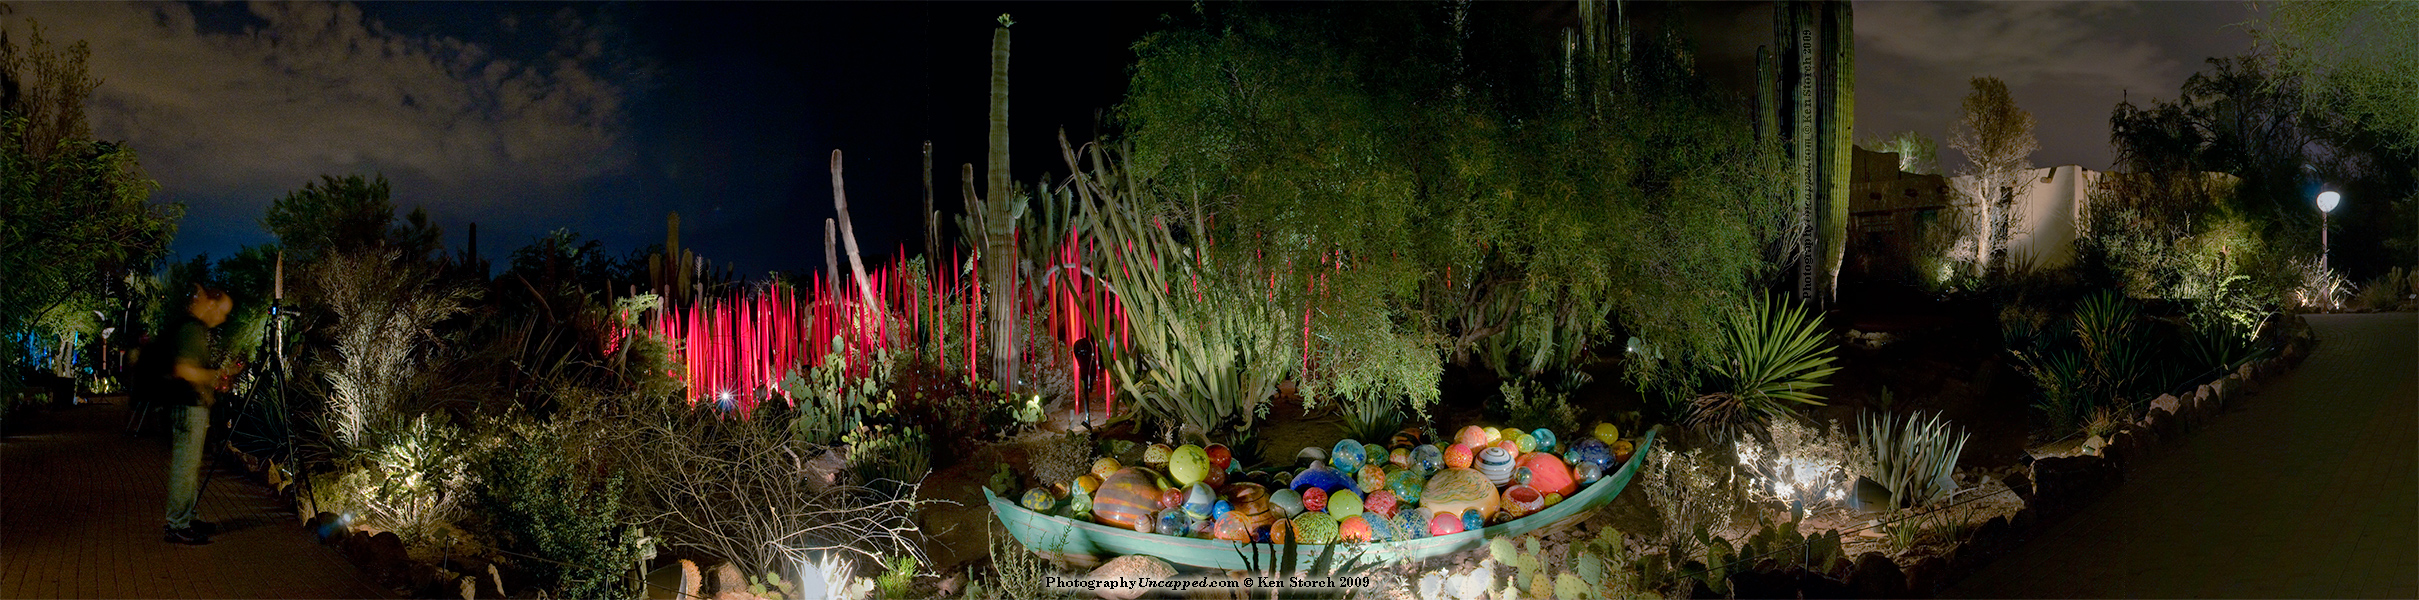 Desert Botanical Garden Chihuly installation panoramic photograph